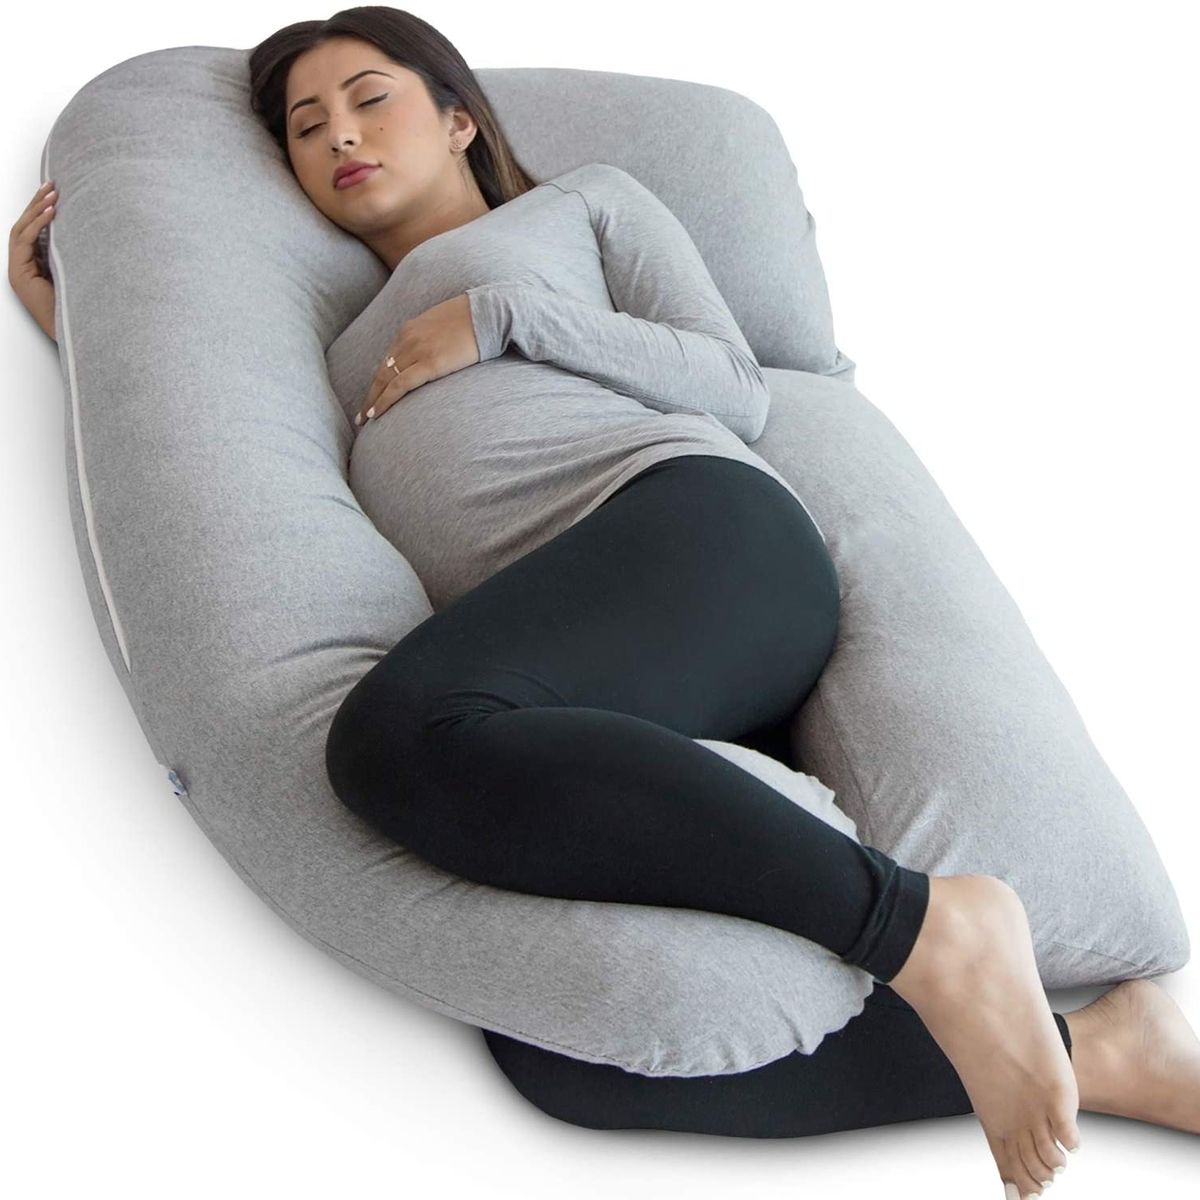 11 Best Pregnancy Pillows 2021 | The 